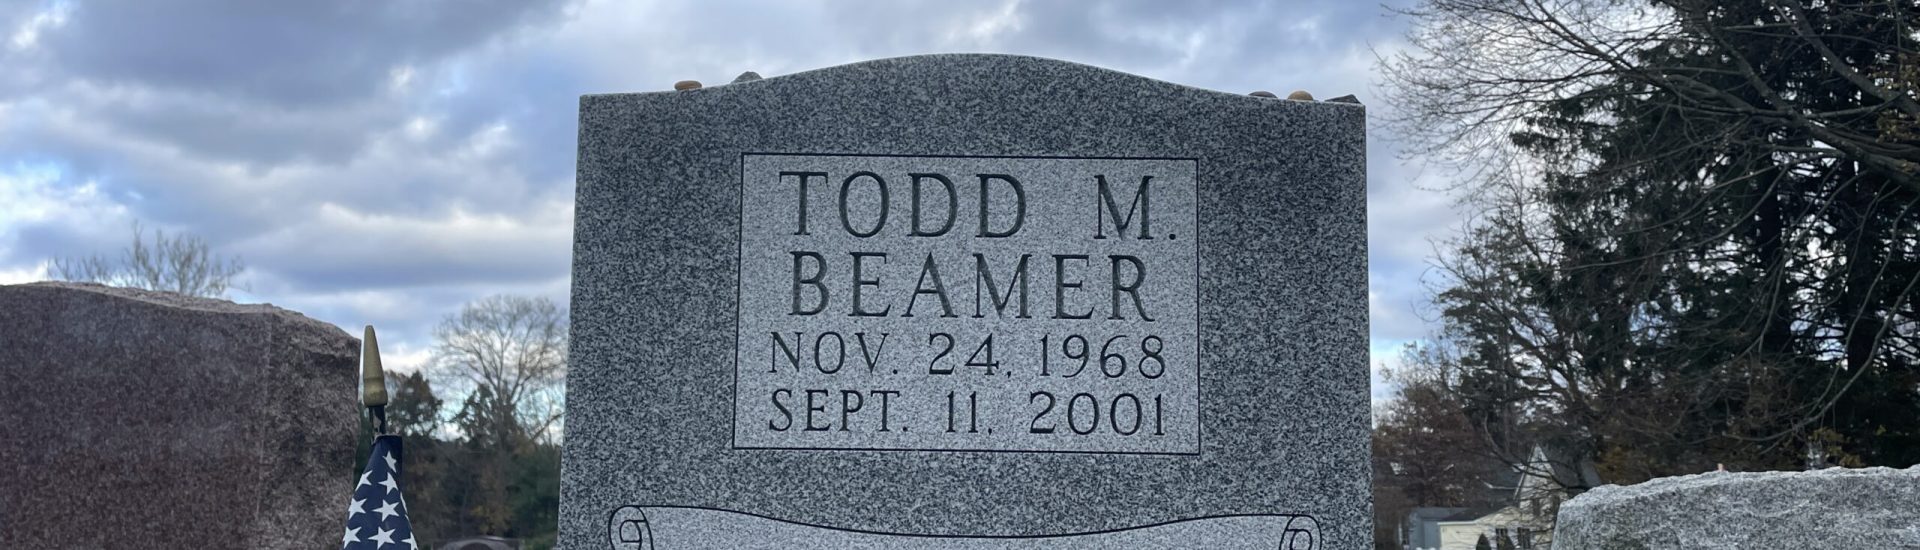 Todd Beamer